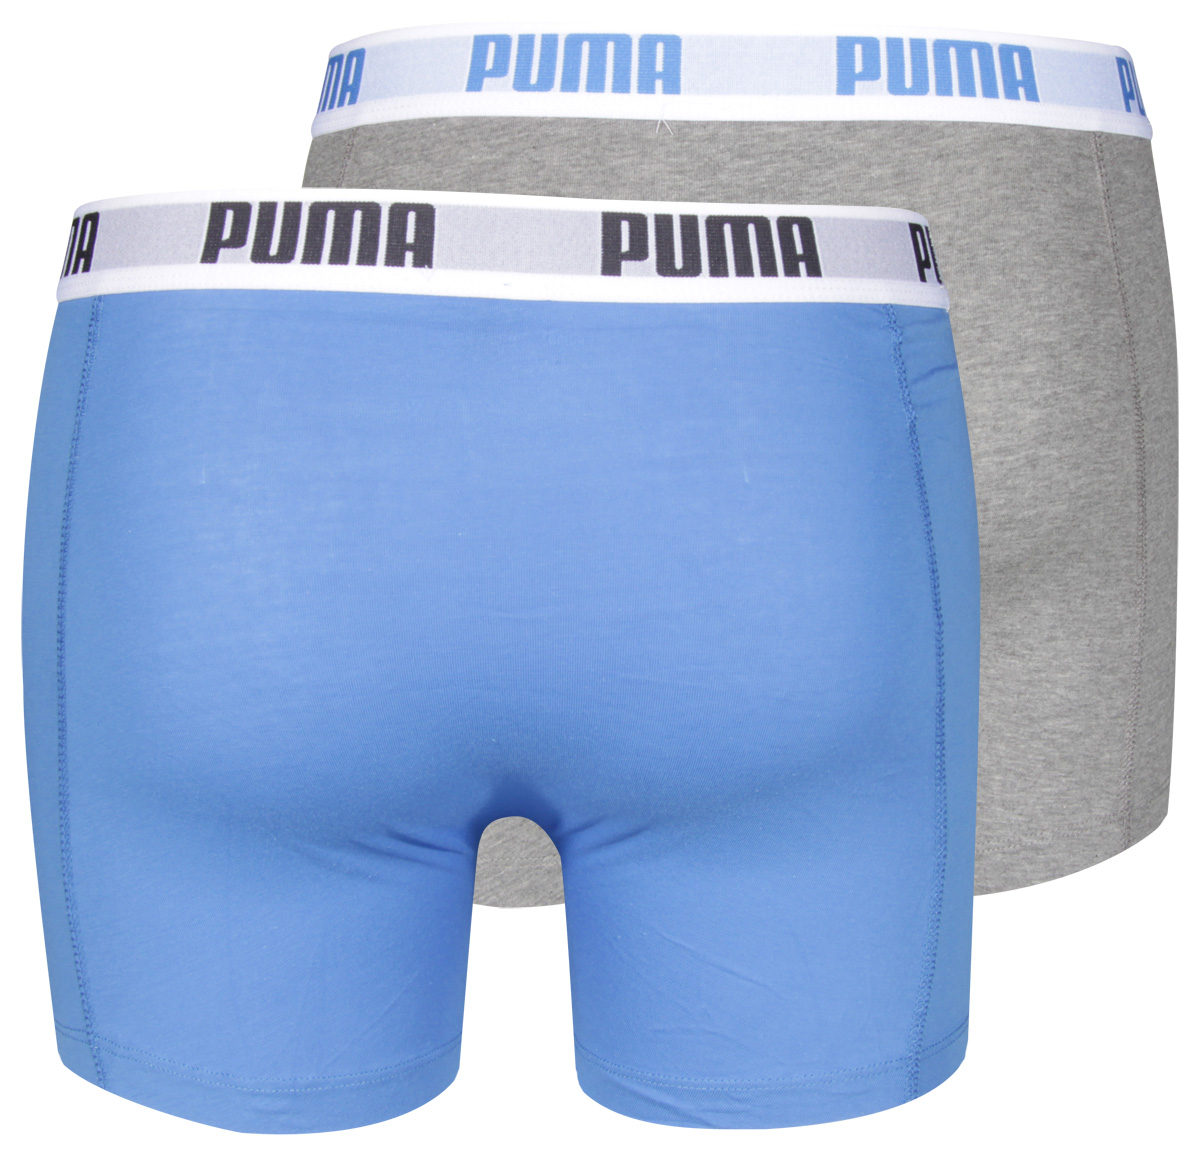 Puma boxershorts 2-pack grijs-blauw achterkant